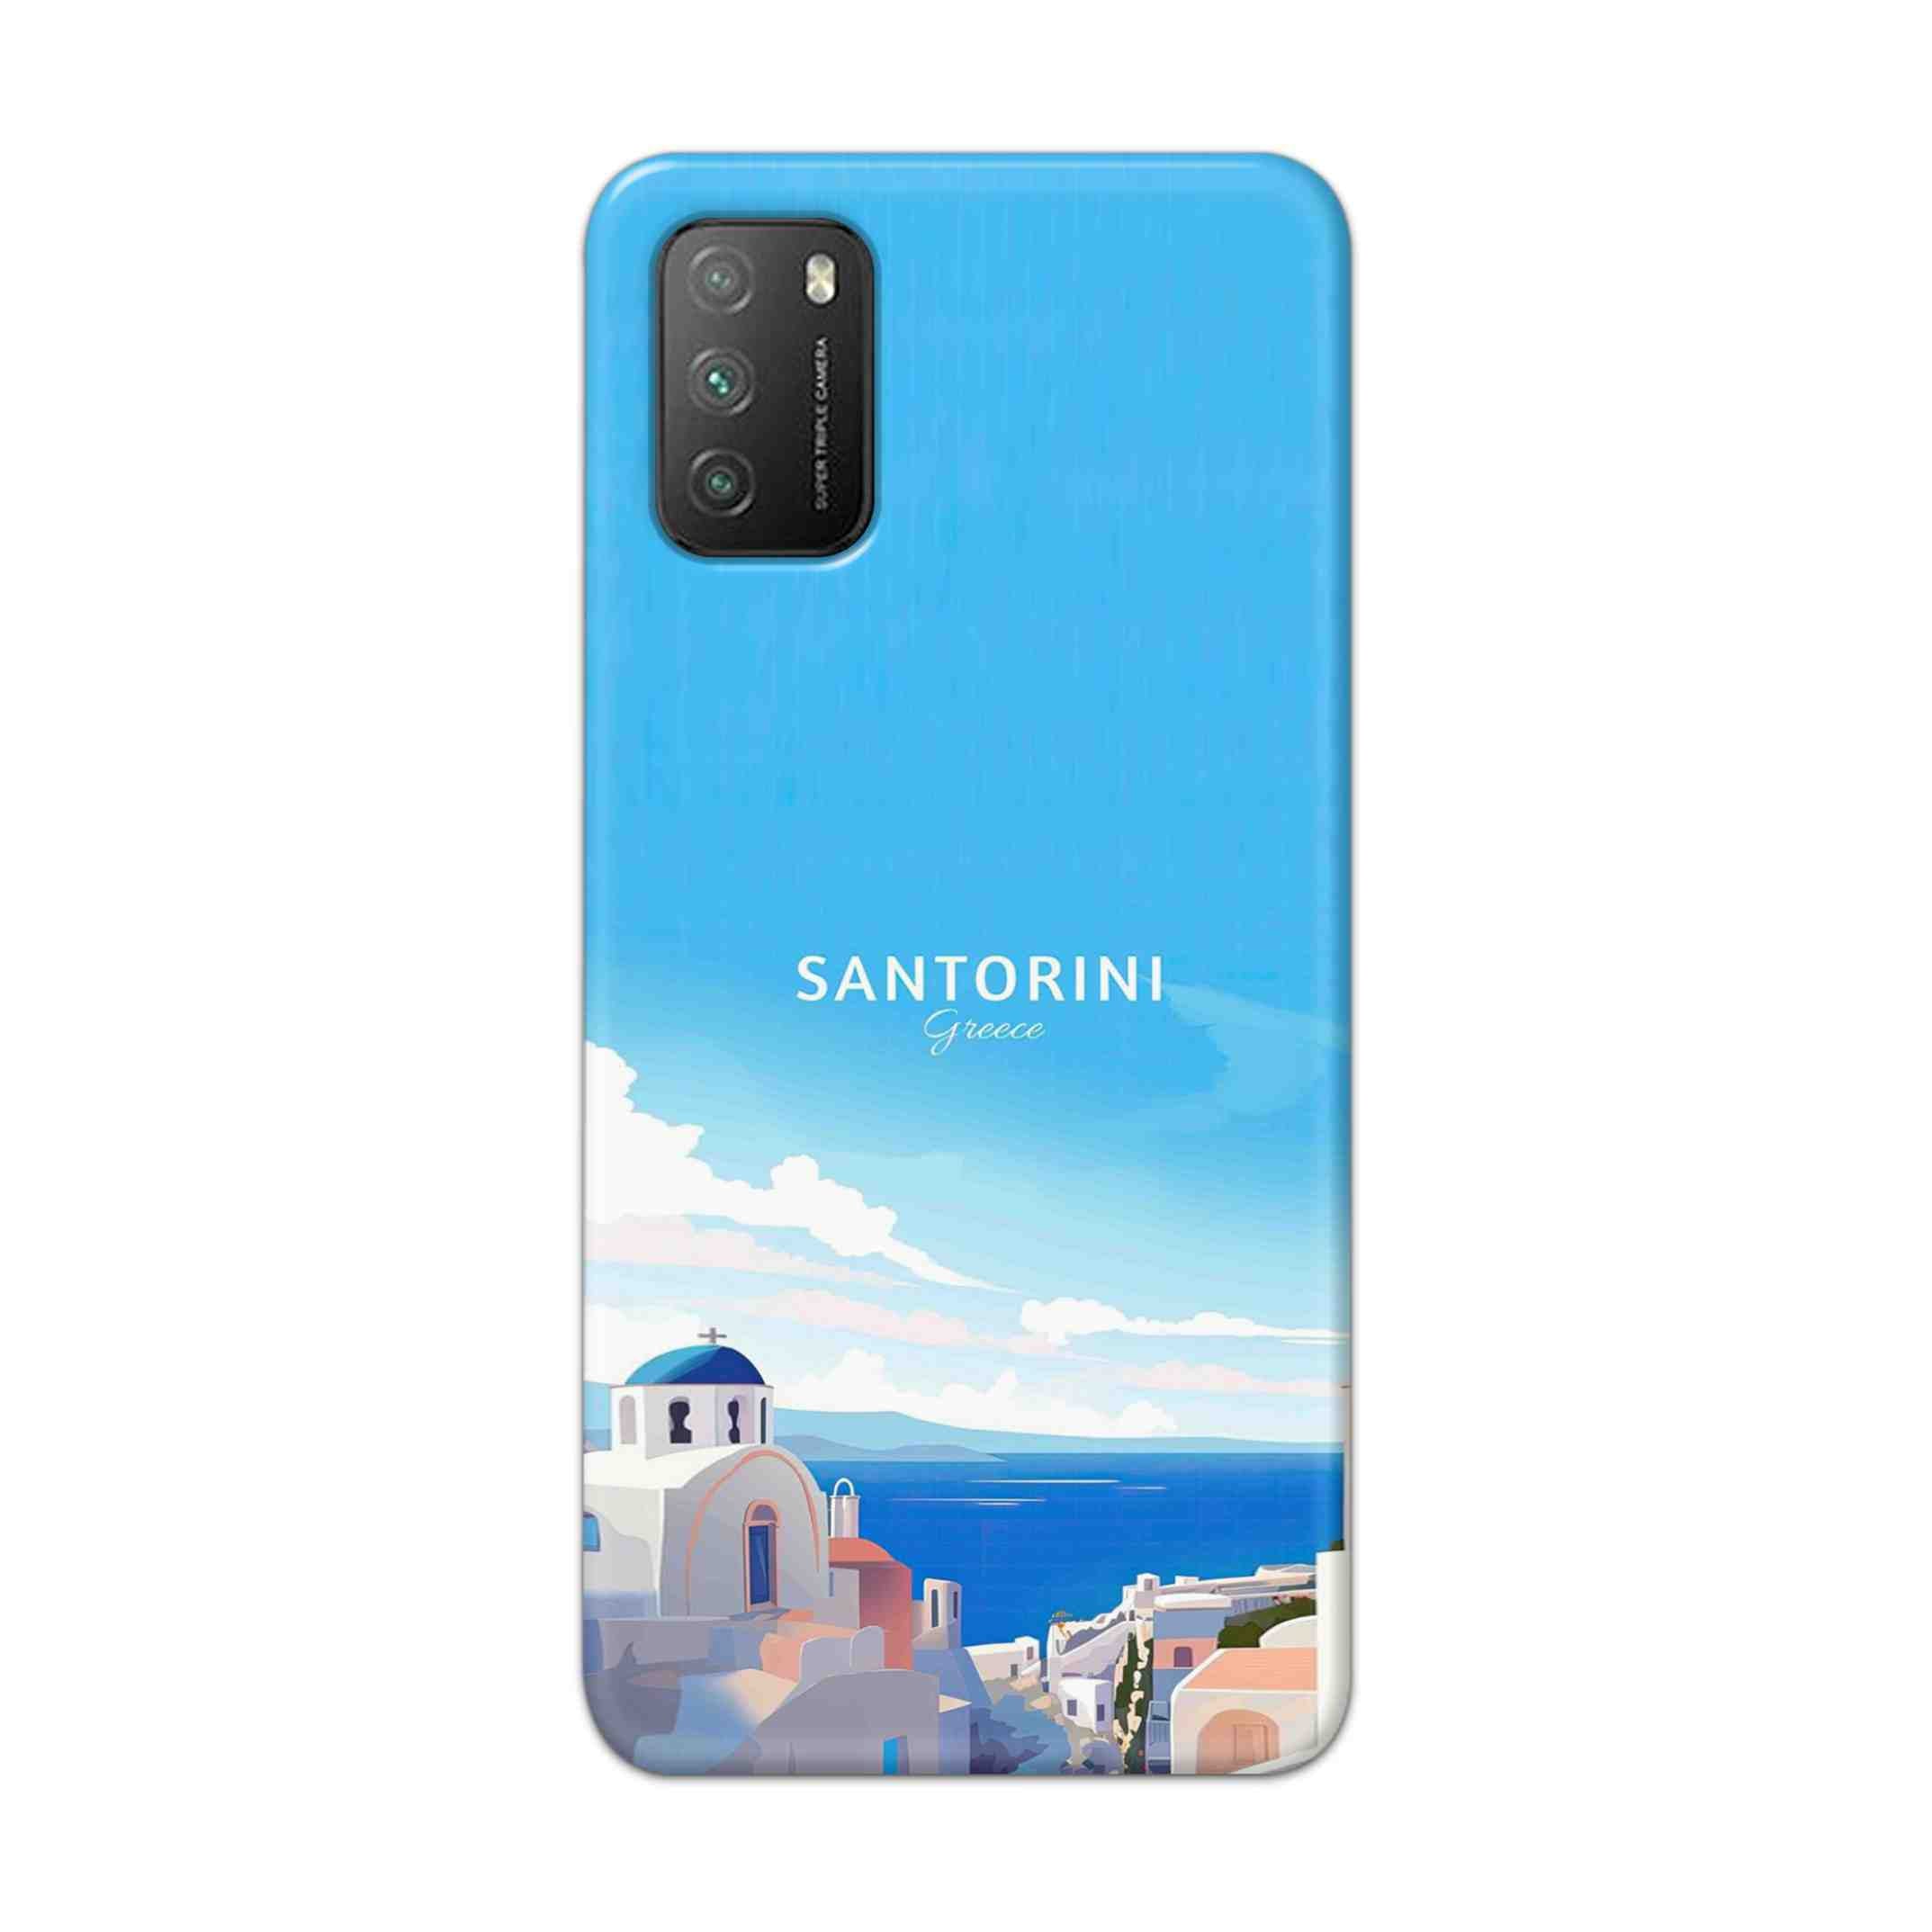 Buy Santorini Hard Back Mobile Phone Case Cover For Poco M3 Online